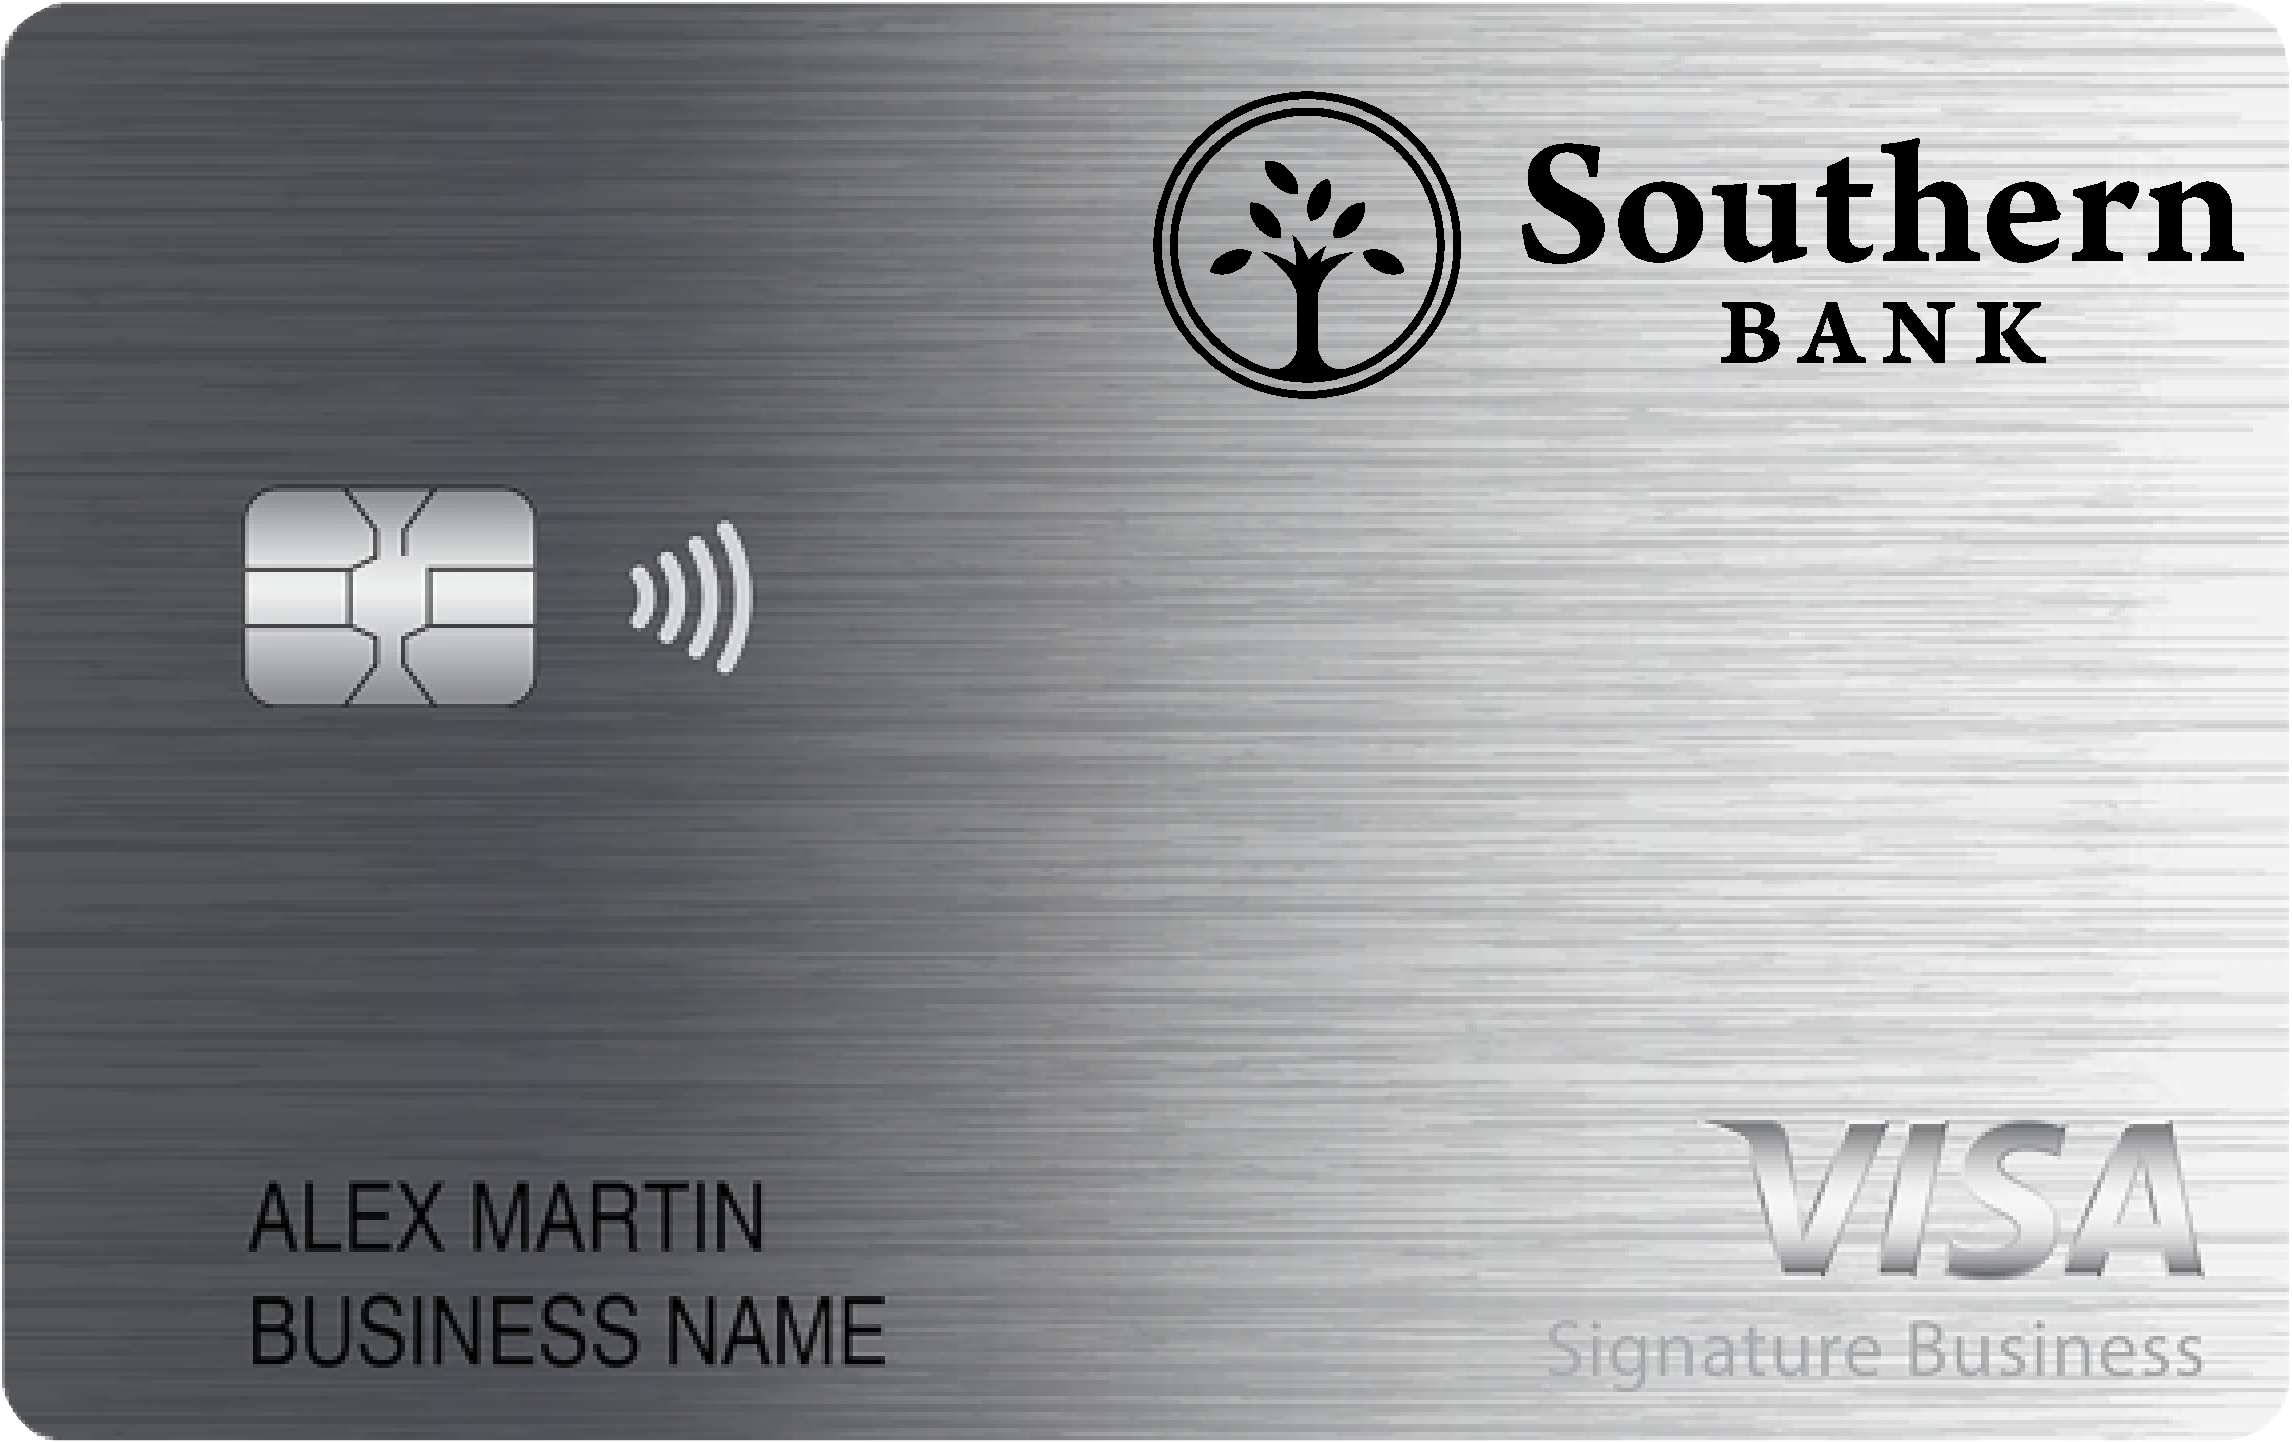 Southern Bank Smart Business Rewards Card